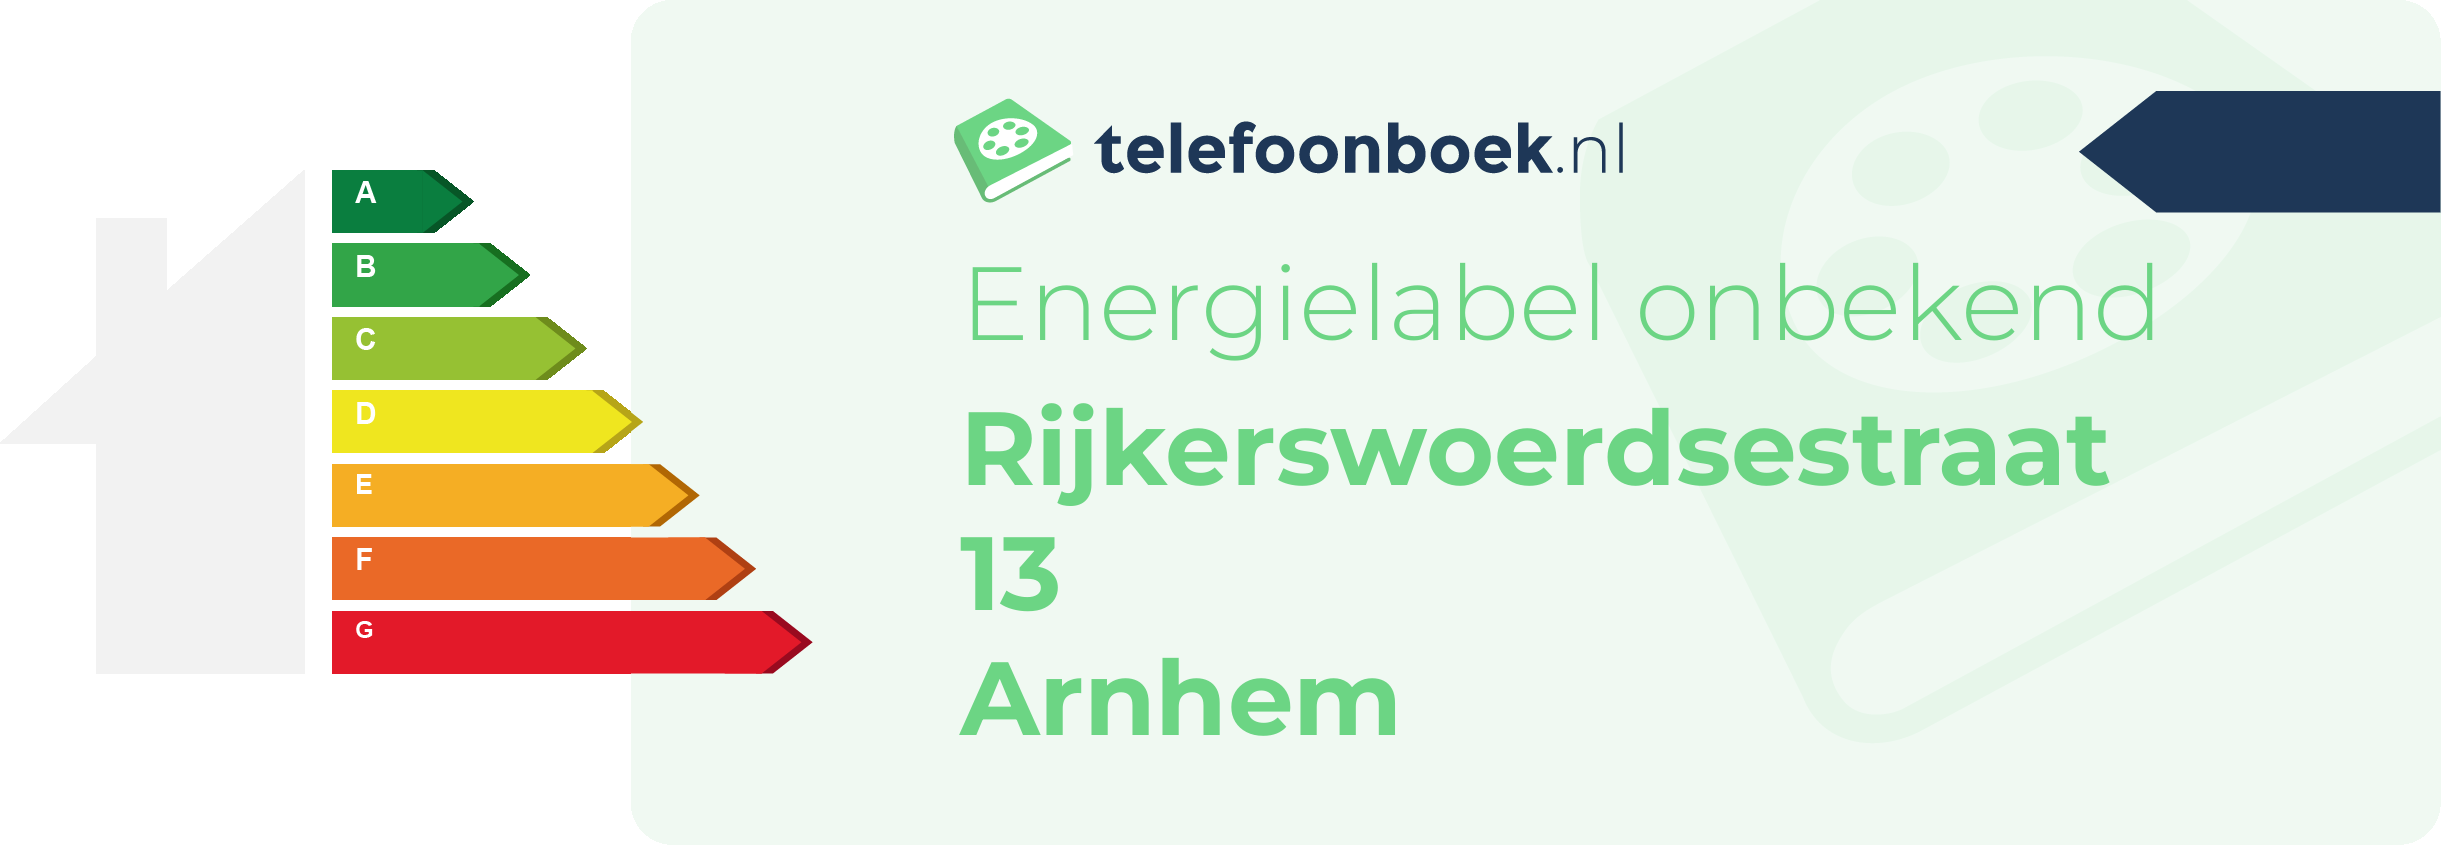 Energielabel Rijkerswoerdsestraat 13 Arnhem